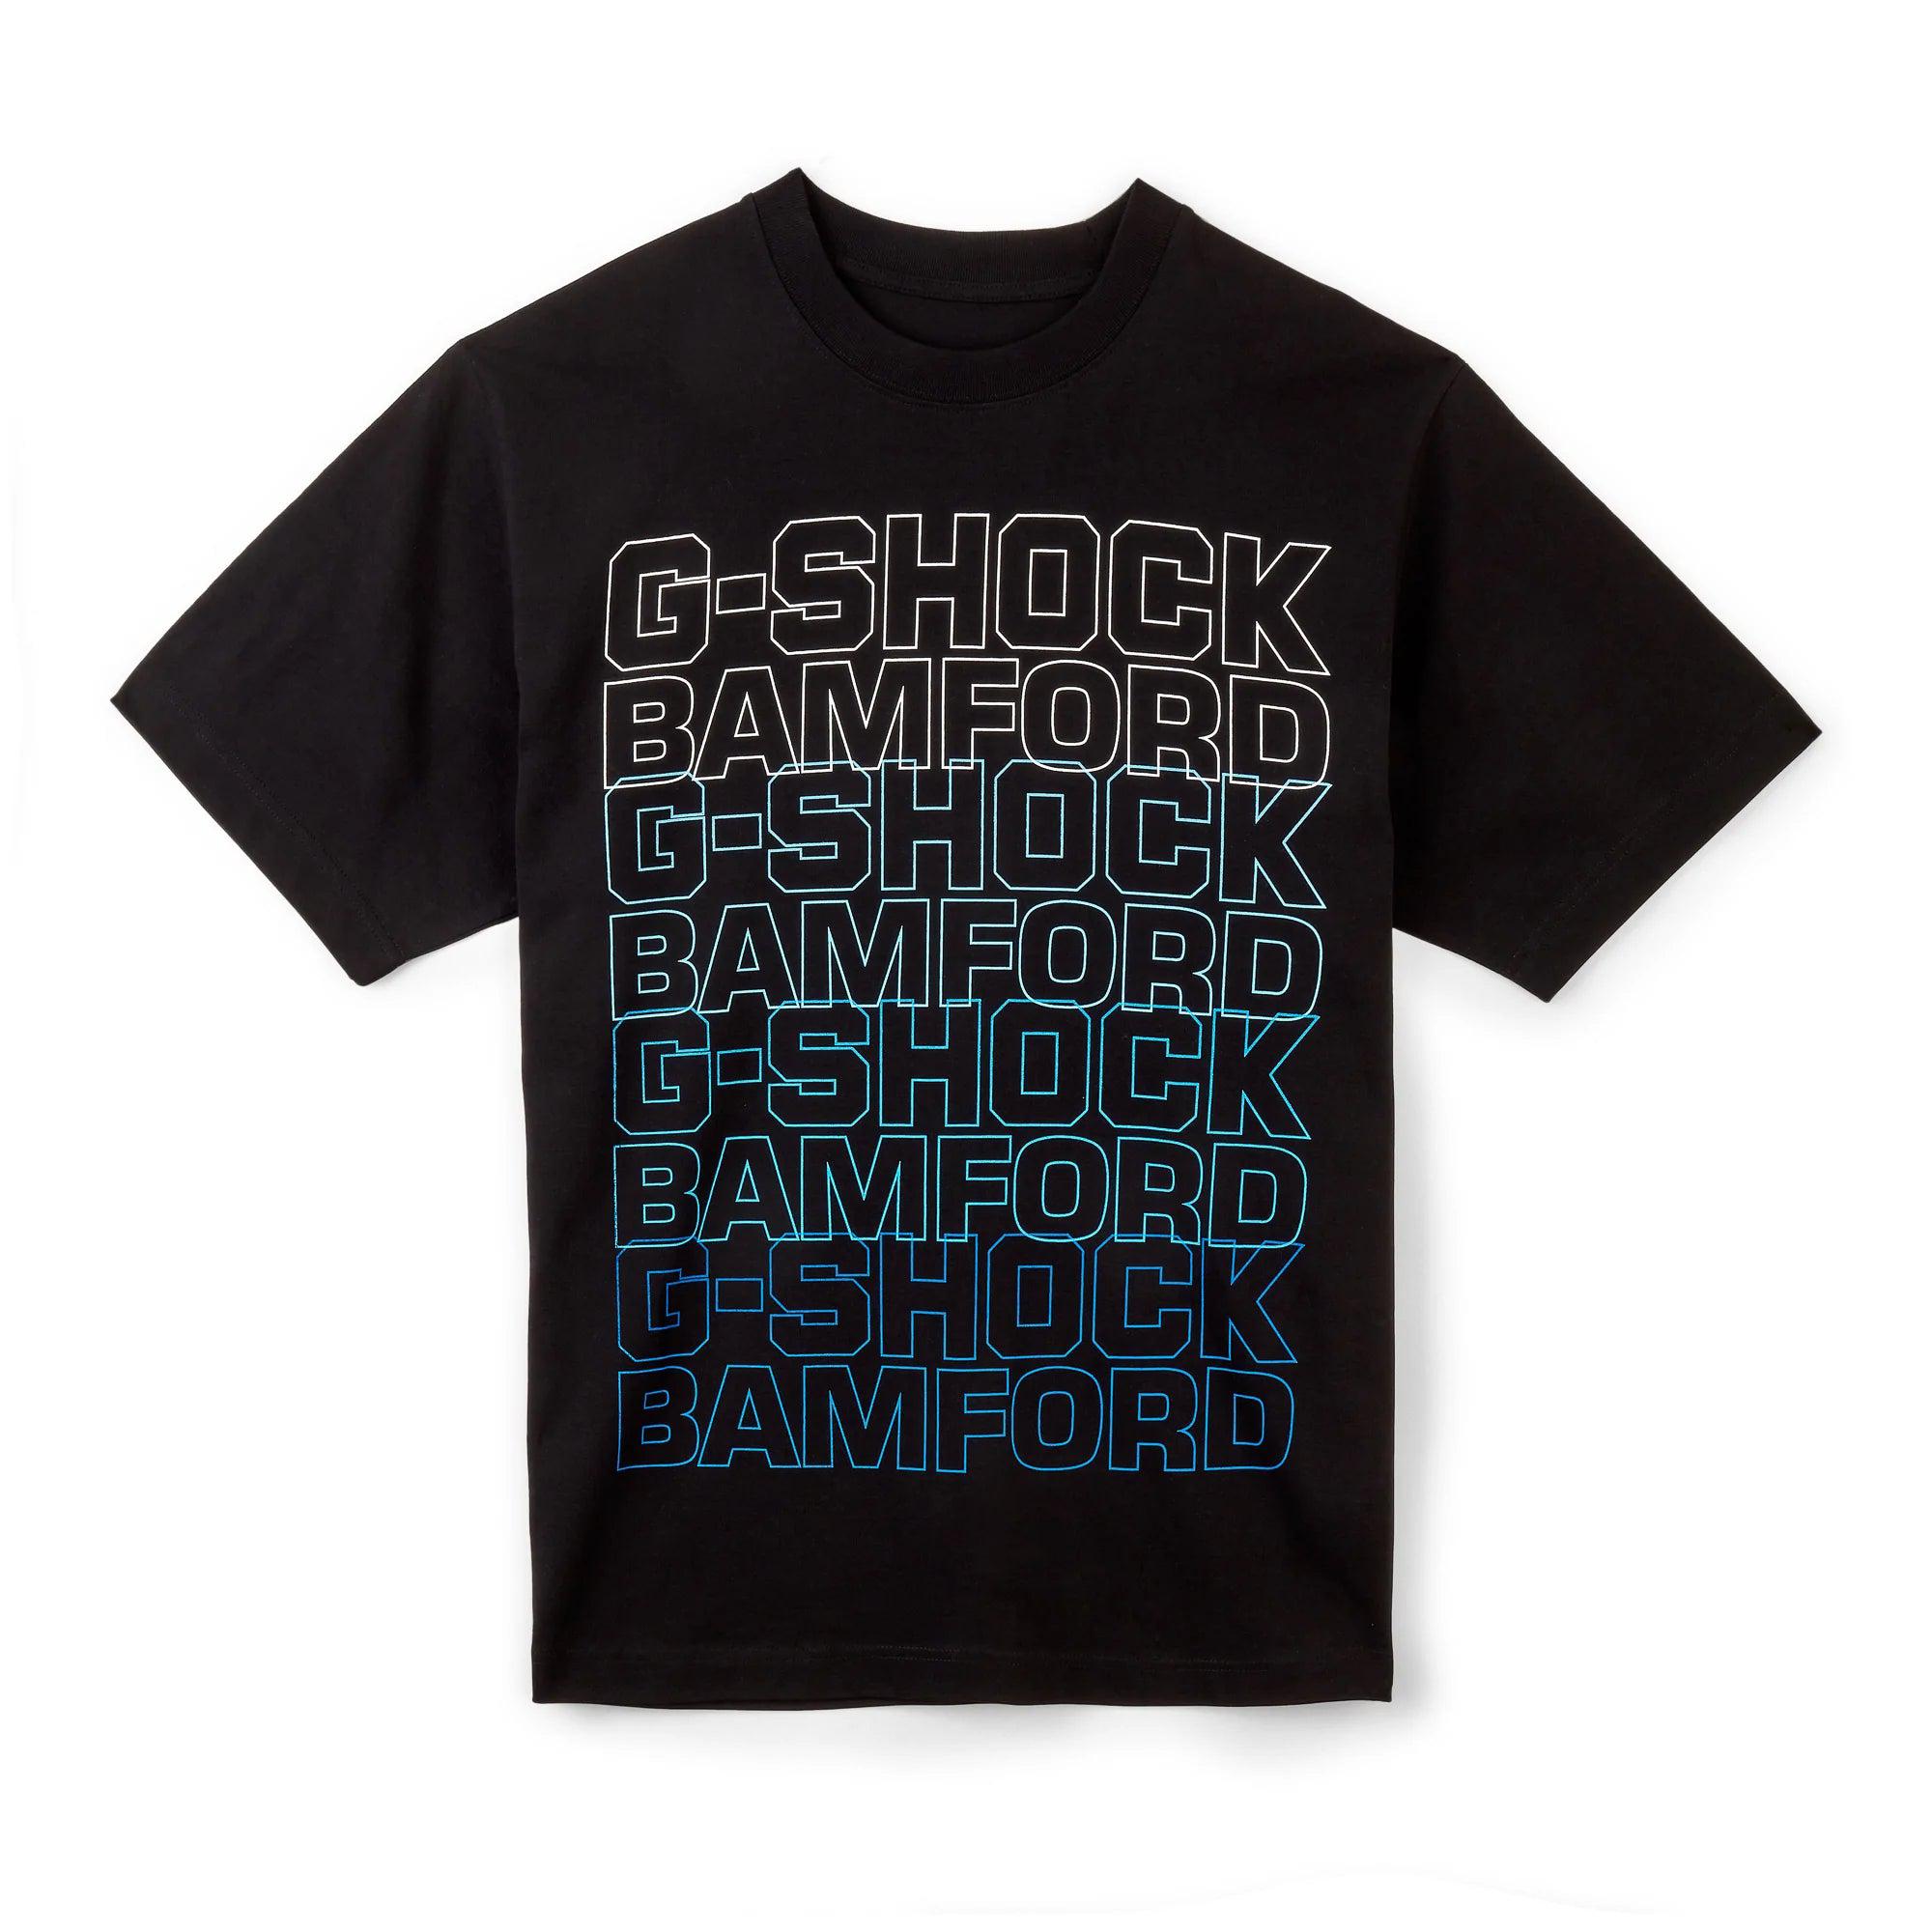 Bamford x Casio G-Shock T-Shirt (Black) by BAMFORD